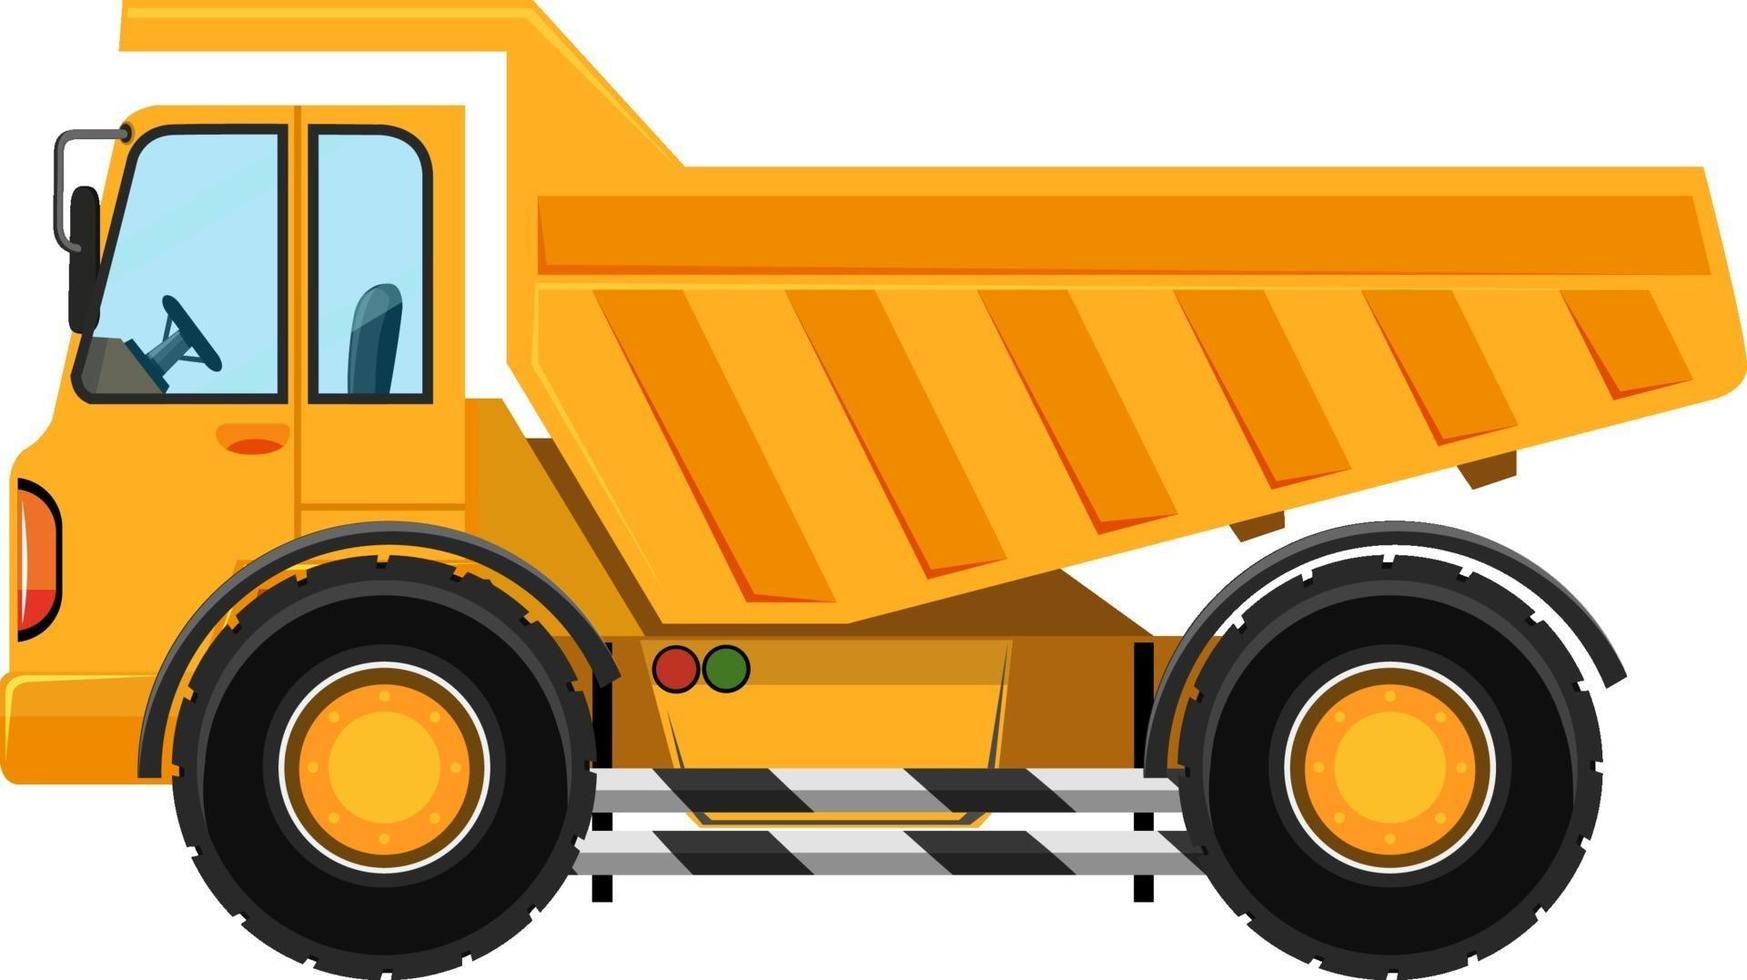 Heavy dump truck in cartoon style on white background vector